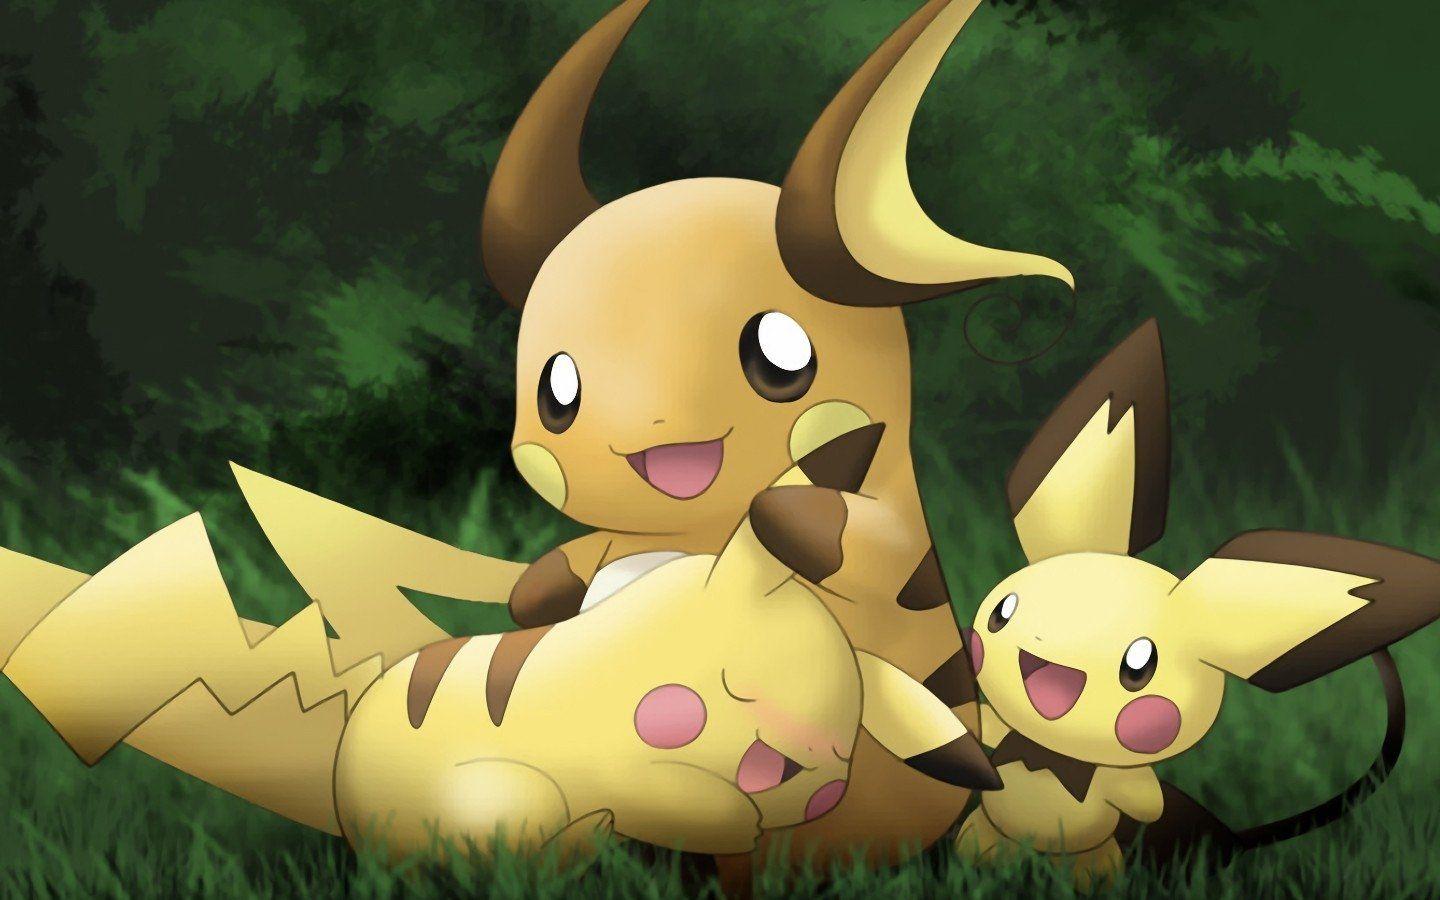 Pichu (Pokémon) HD Wallpaper and Background Image